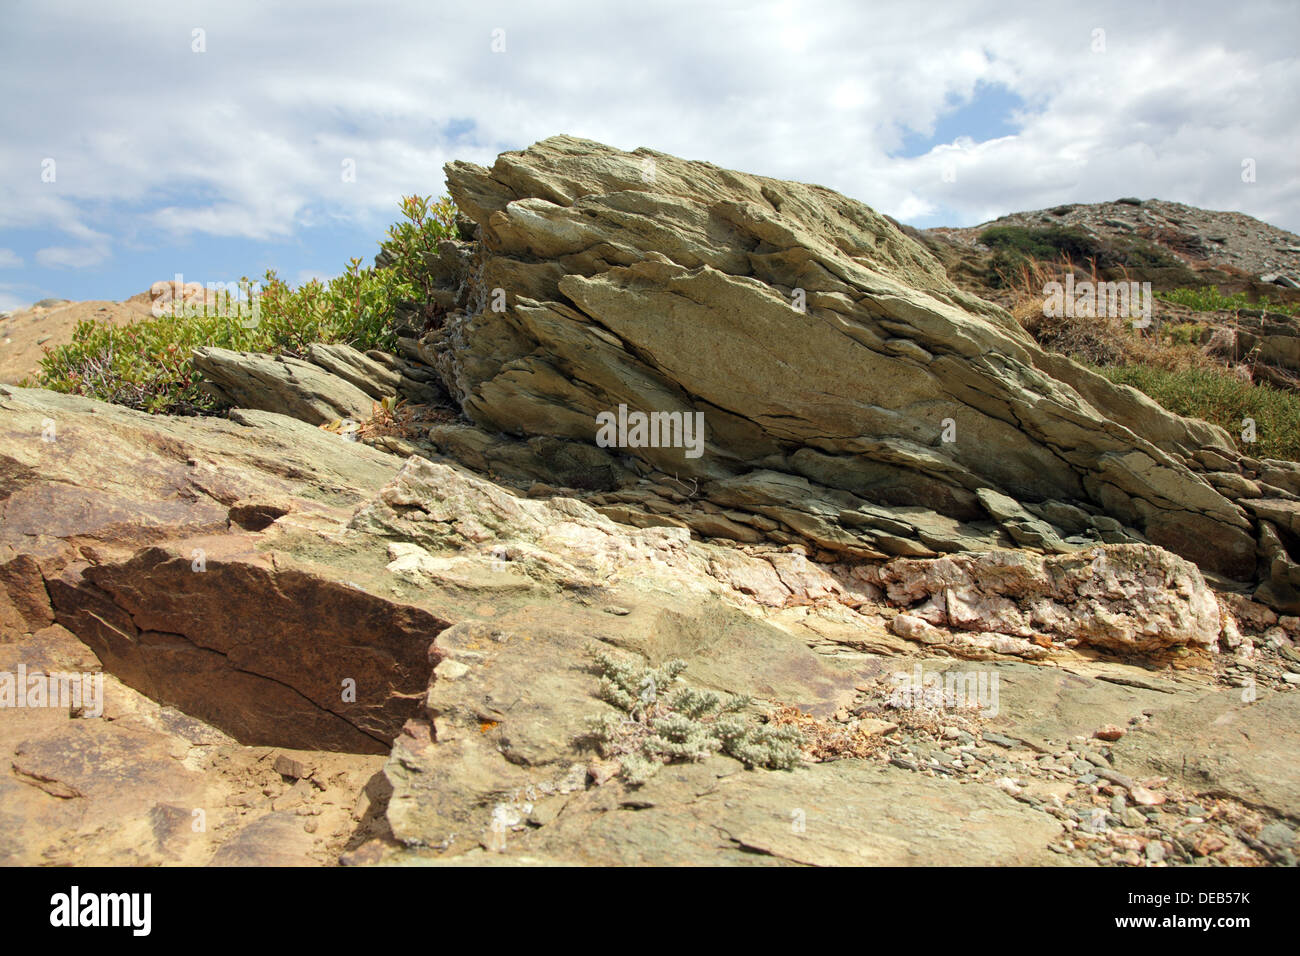 Rocks close-up on a Crete Island, Greece Stock Photo